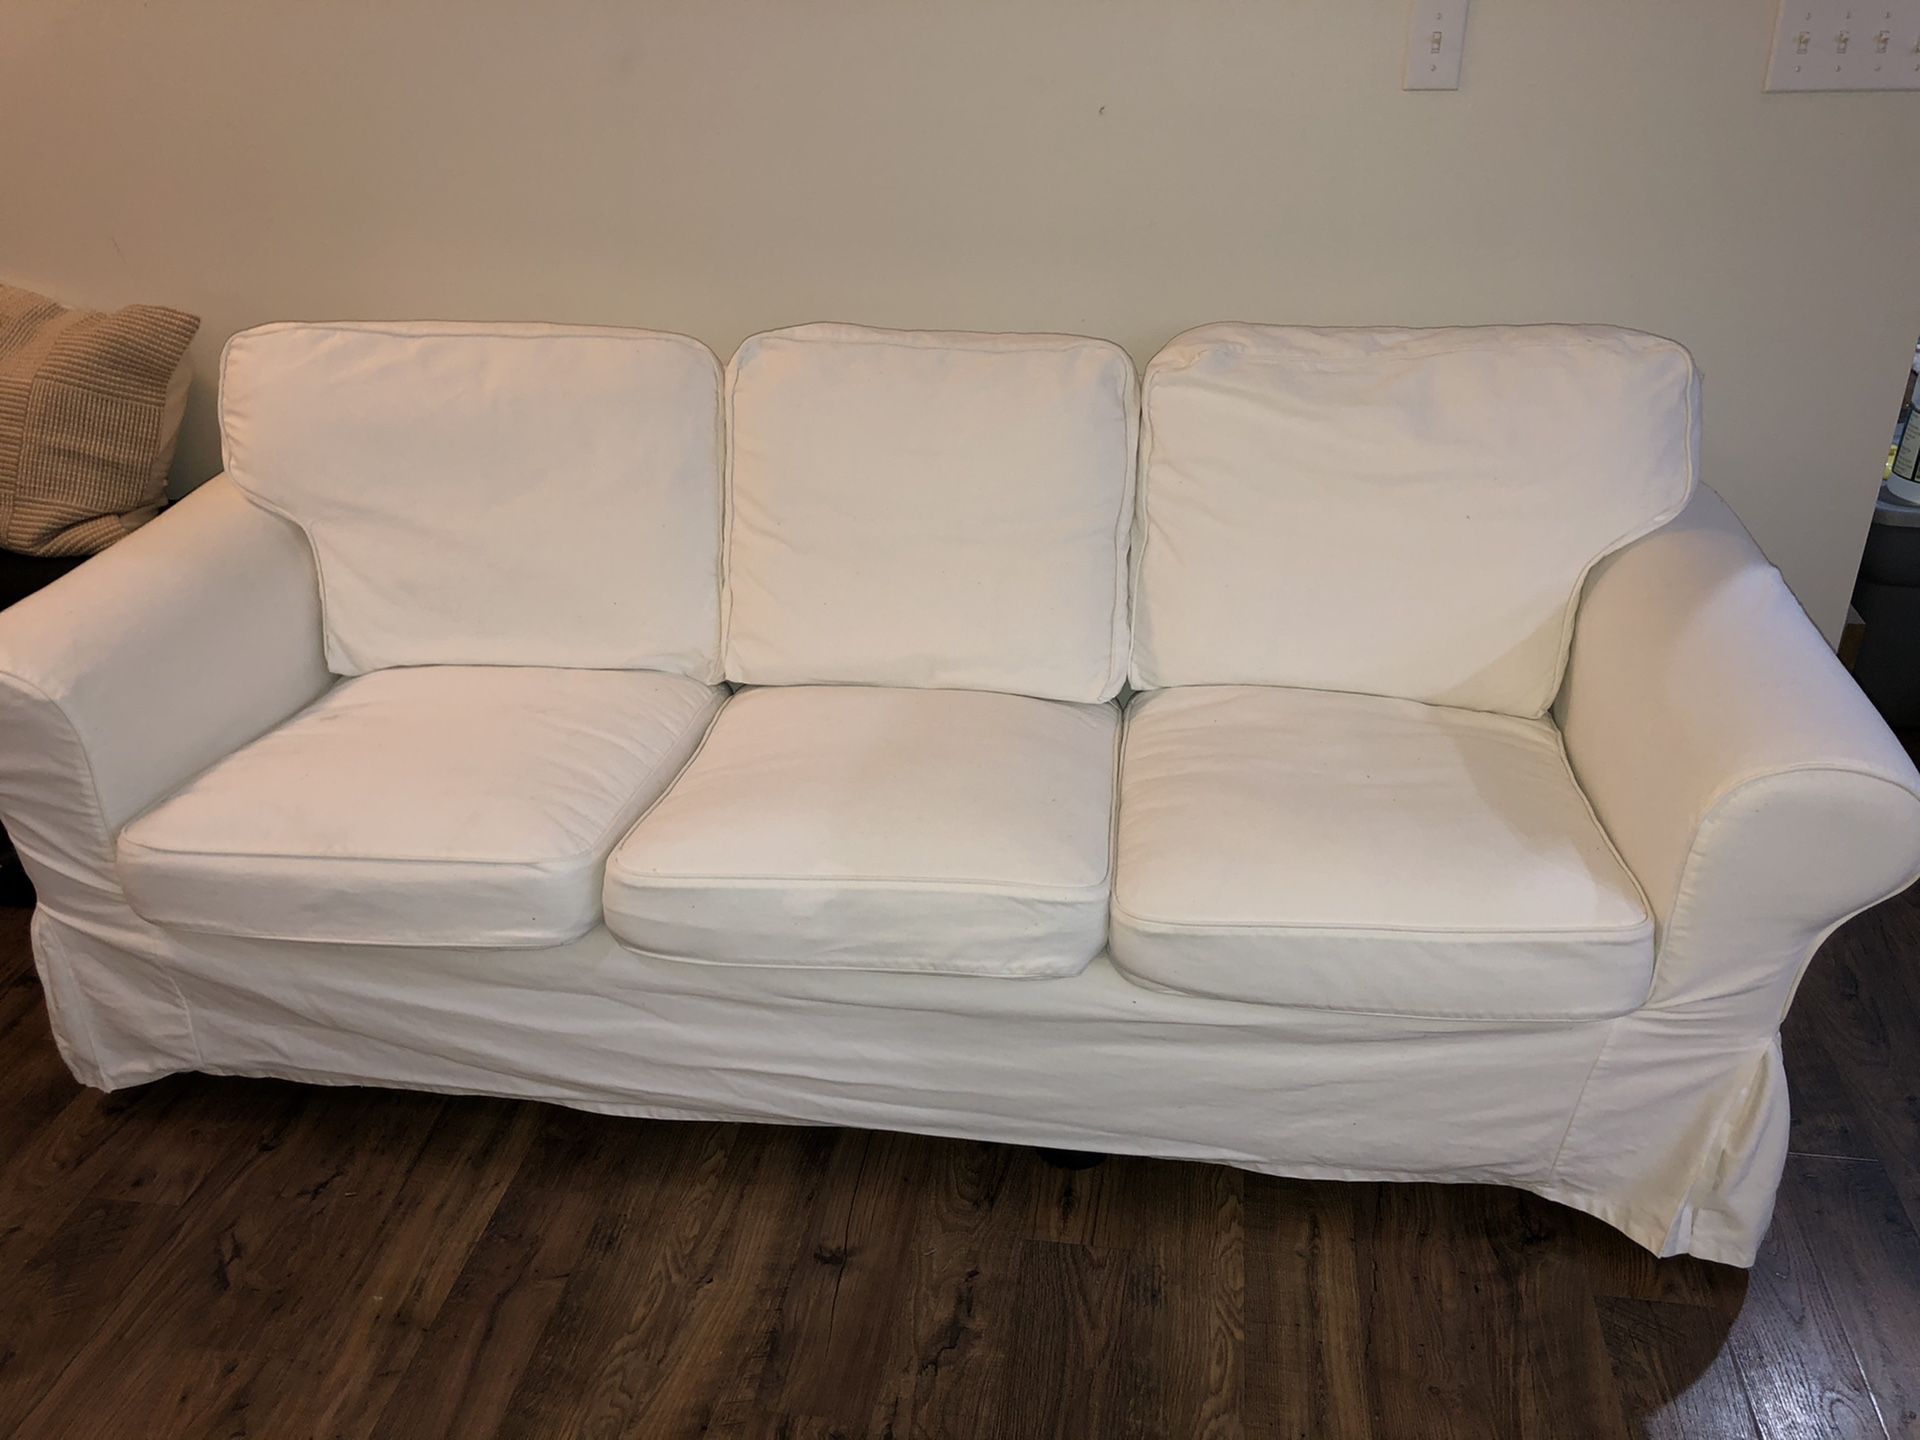 Ikea Ektorp couch / sofa